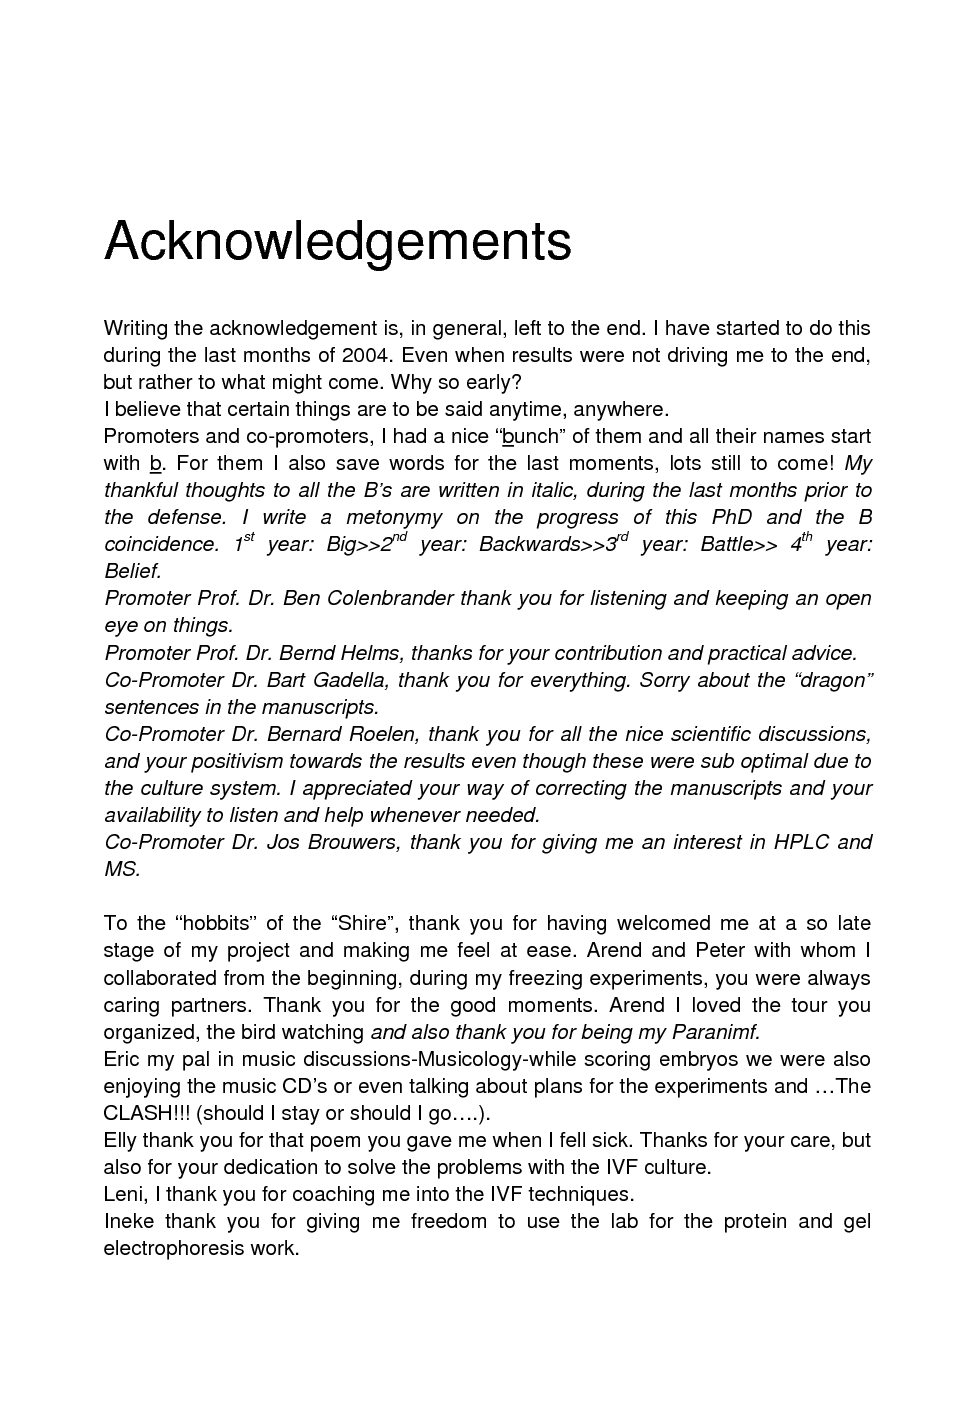 Acknowledgement of dissertation